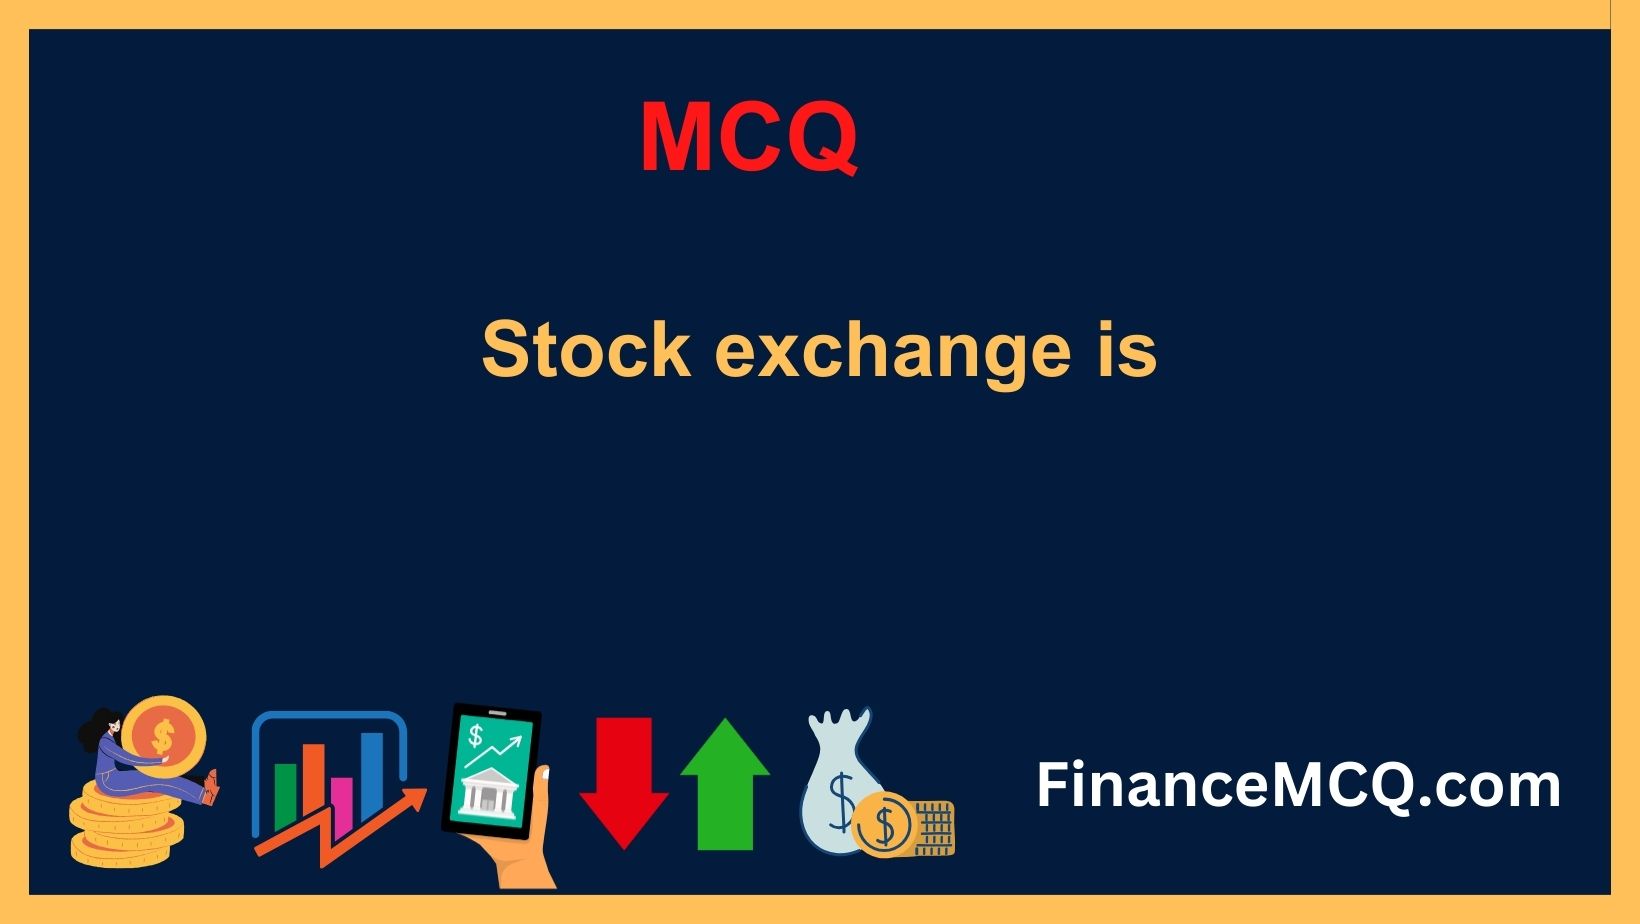 Stock exchange is